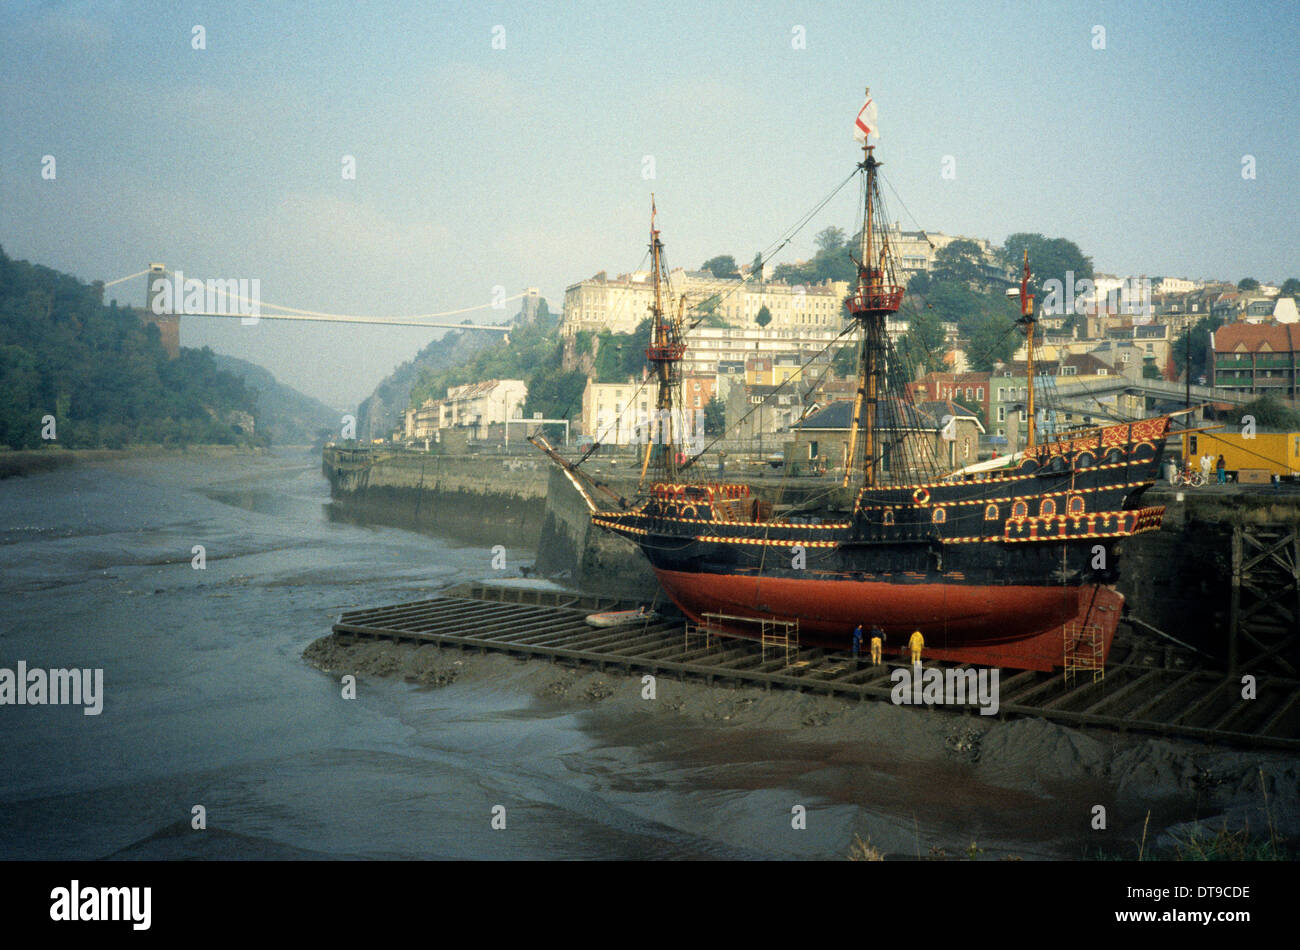 Replica of Golden Hind galleon ship in Bristol Uk 1986 Stock Photo